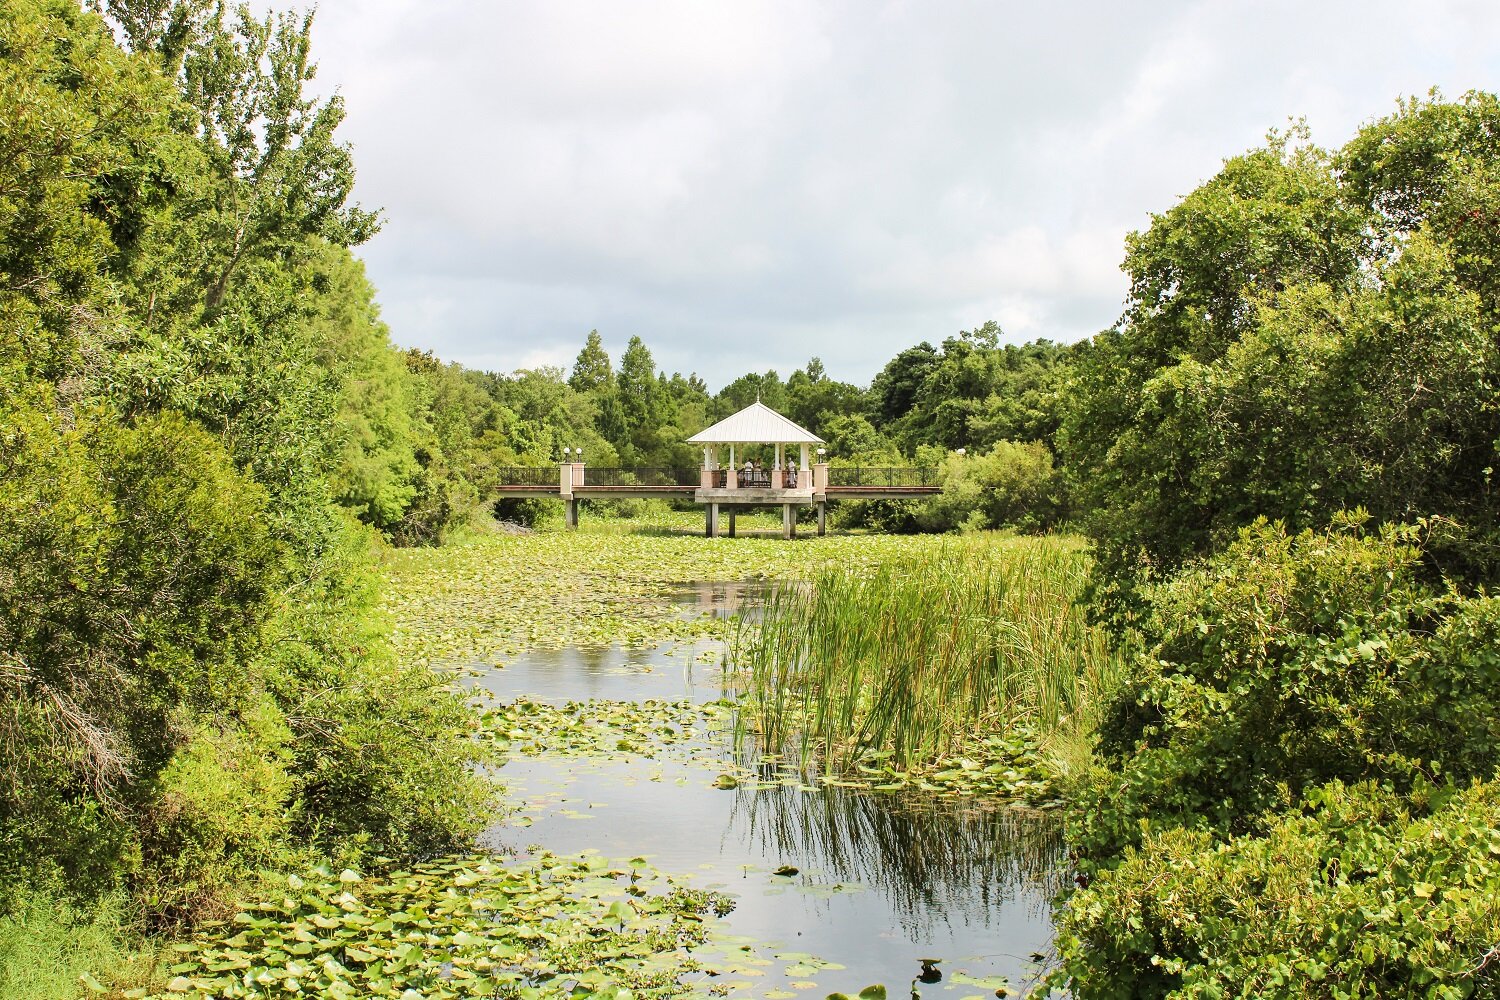 Our favorite Tampa Bay parks to visit | Blooming Magnolias Blog | Travel, Florida